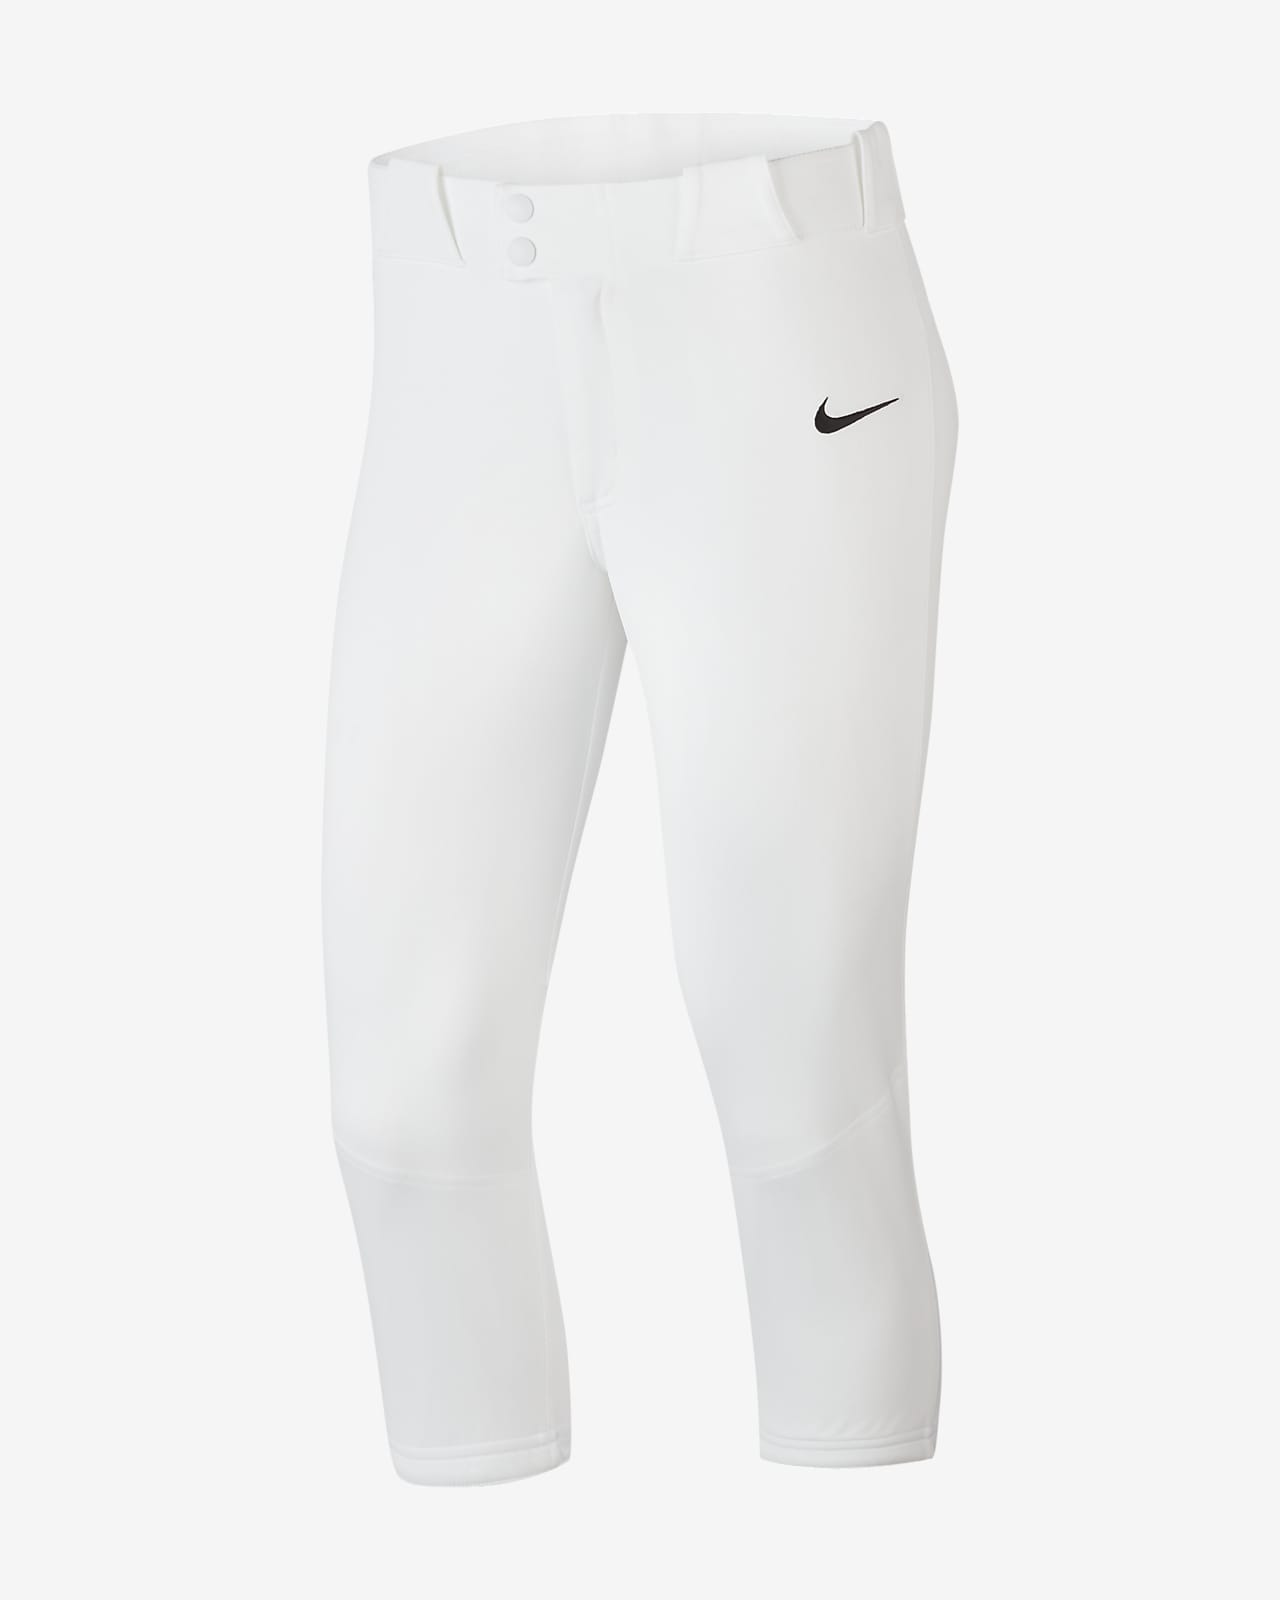 Nike Vapor Select Women's 3/4-Length Softball Pants